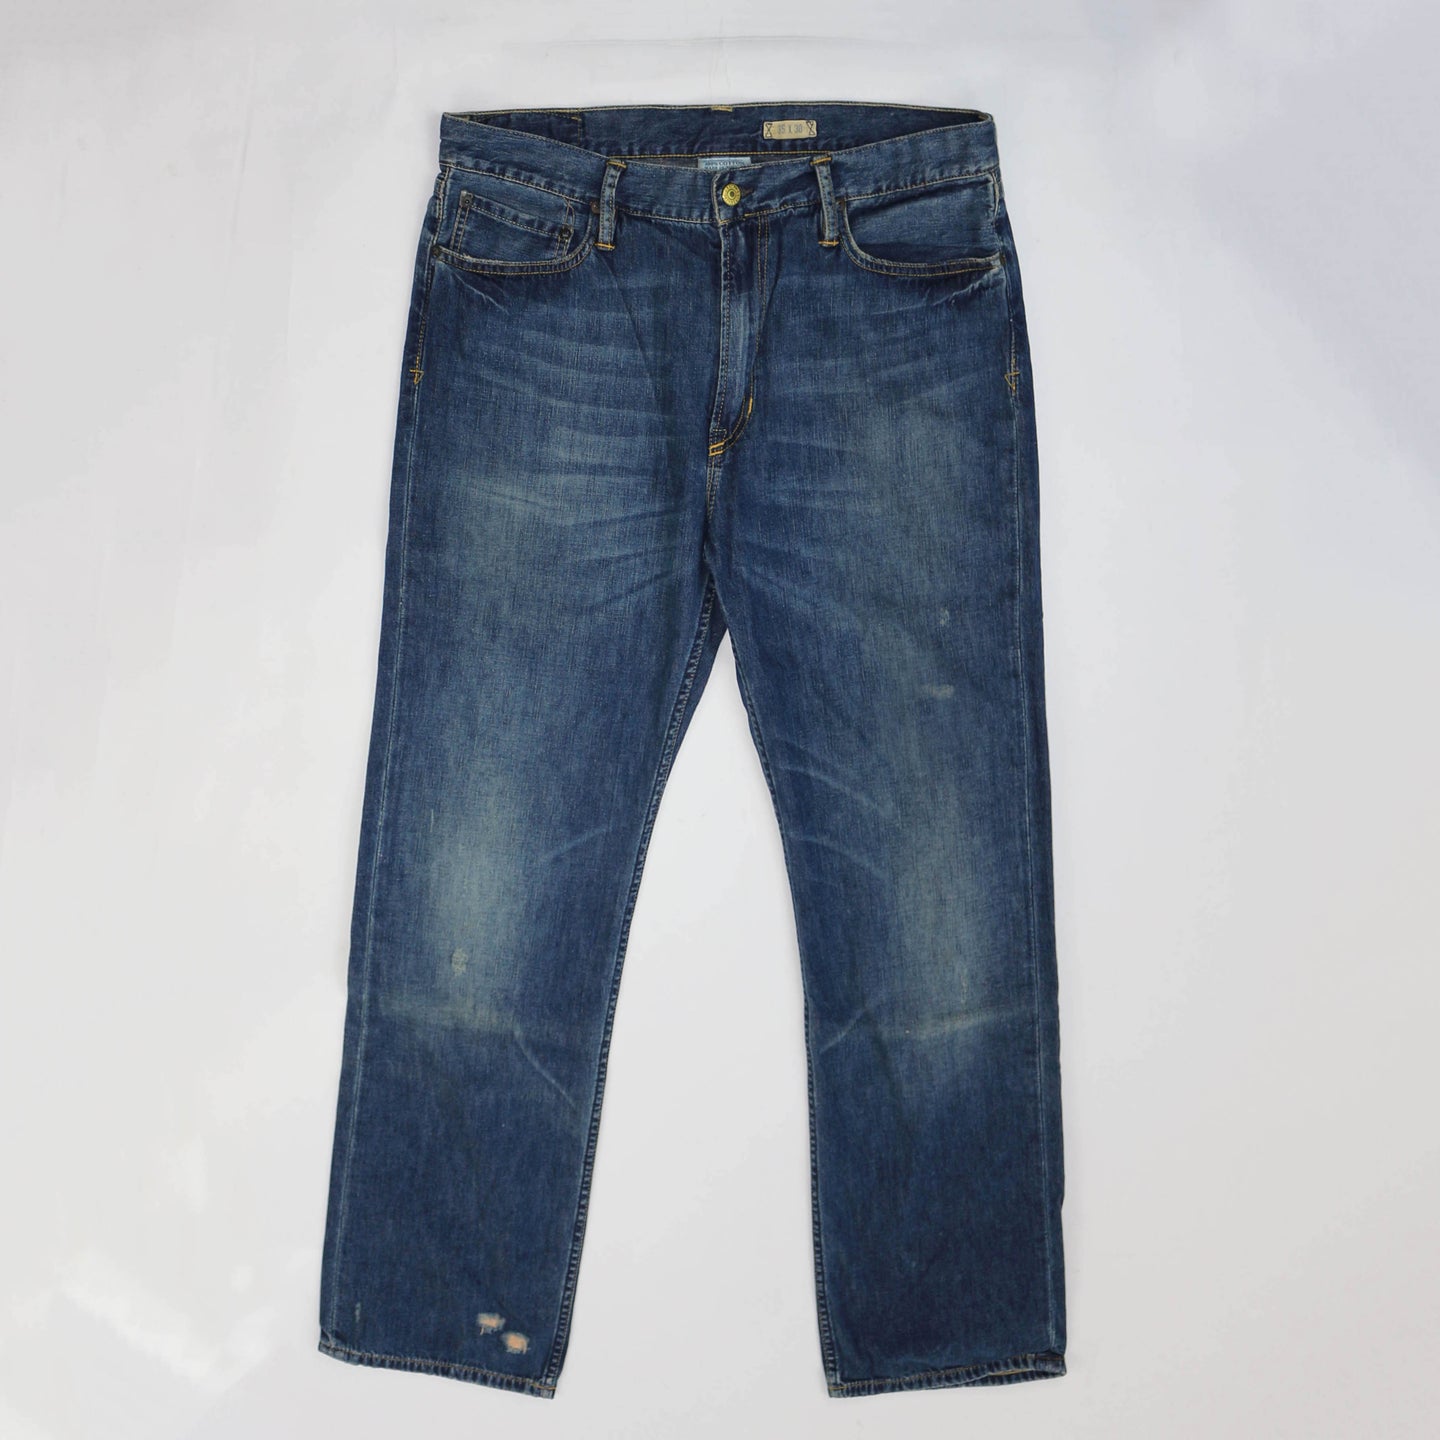 Vintage (2008) RALPH LAUREN POLO Jeans Labeled 35X30